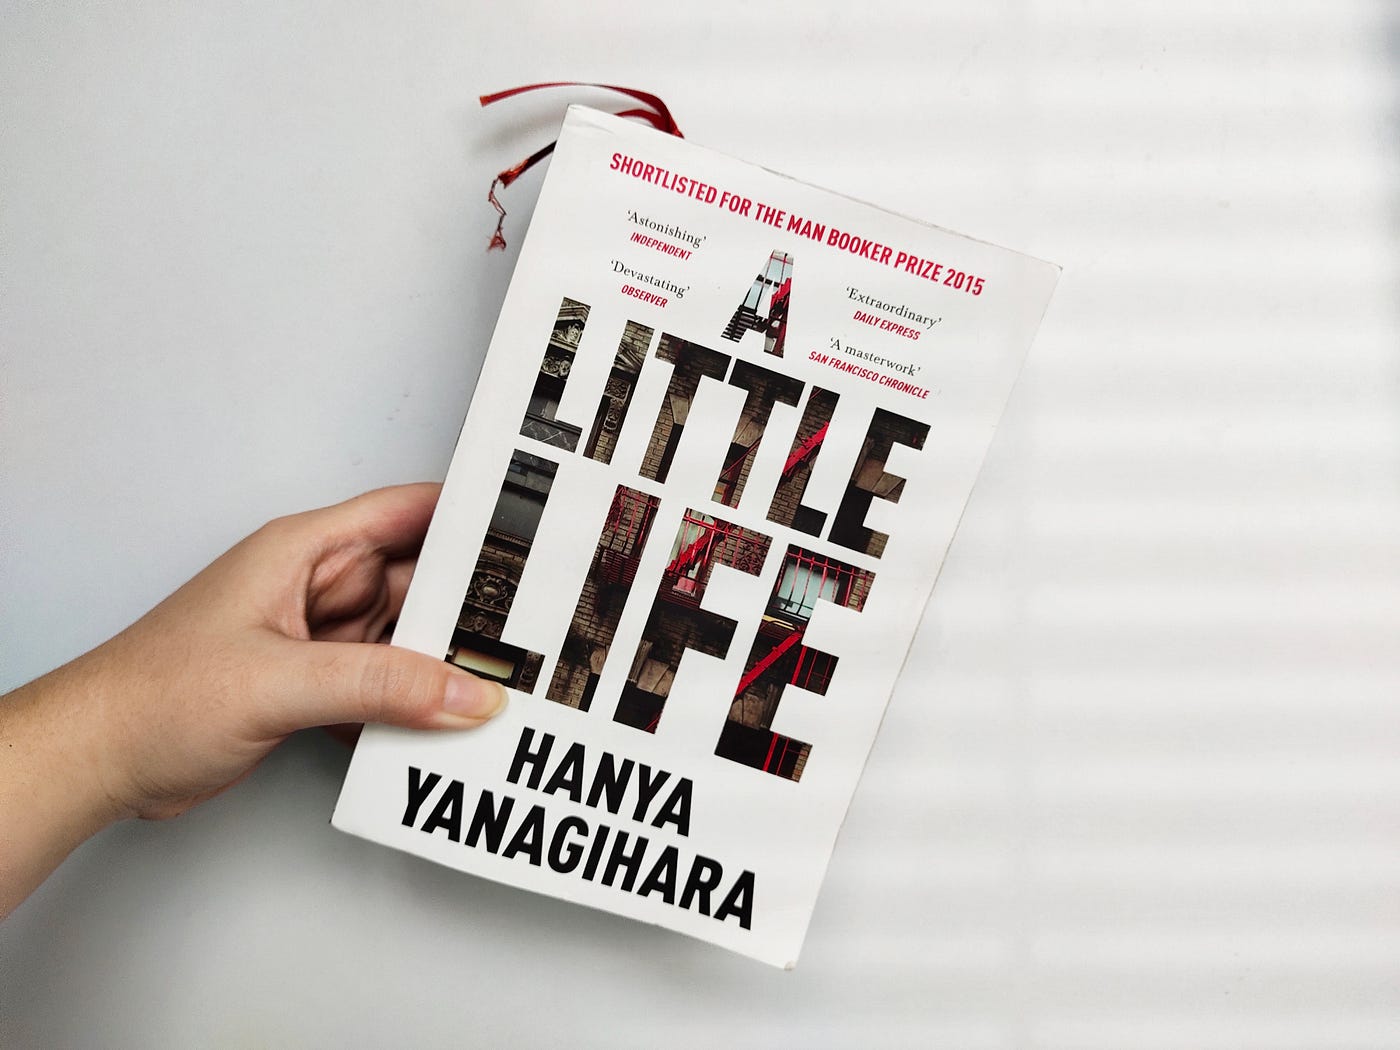 ARO — Adella's Review On: “A Little Life” novel by author Hanya Yanagihara, by Adella🌱